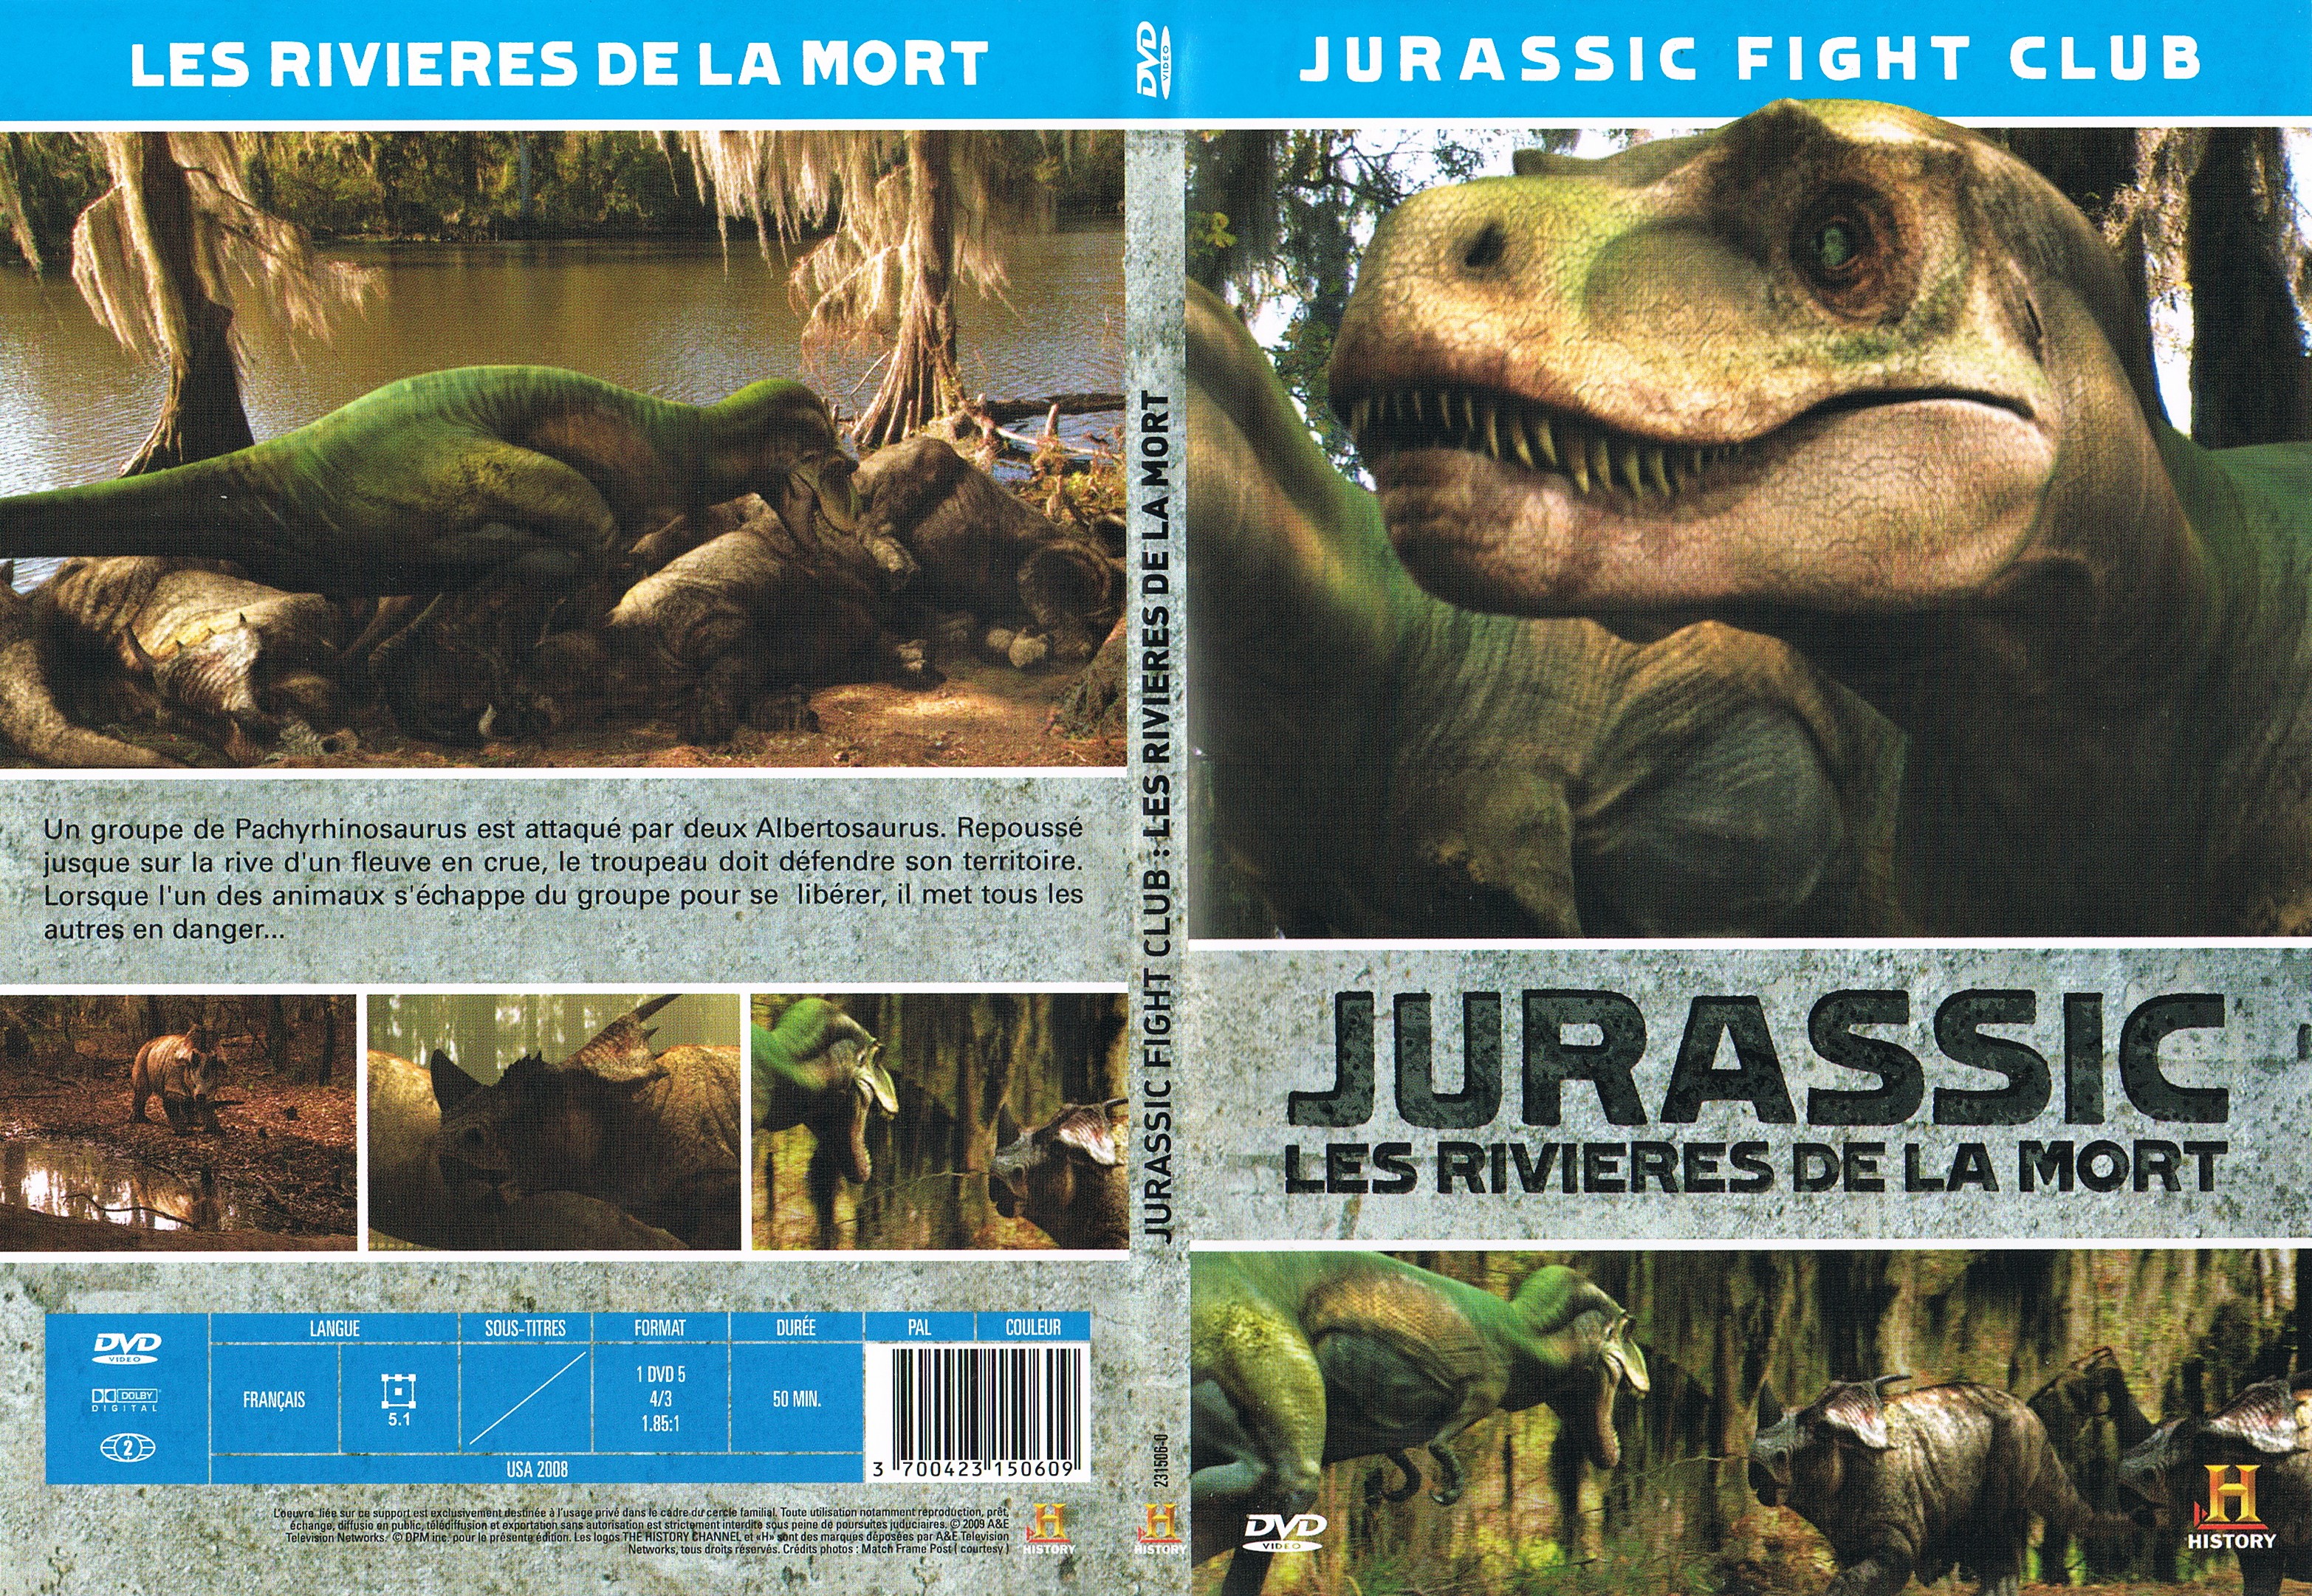 Jaquette DVD Jurassic Fight Club - Les Rivieres De La Mort